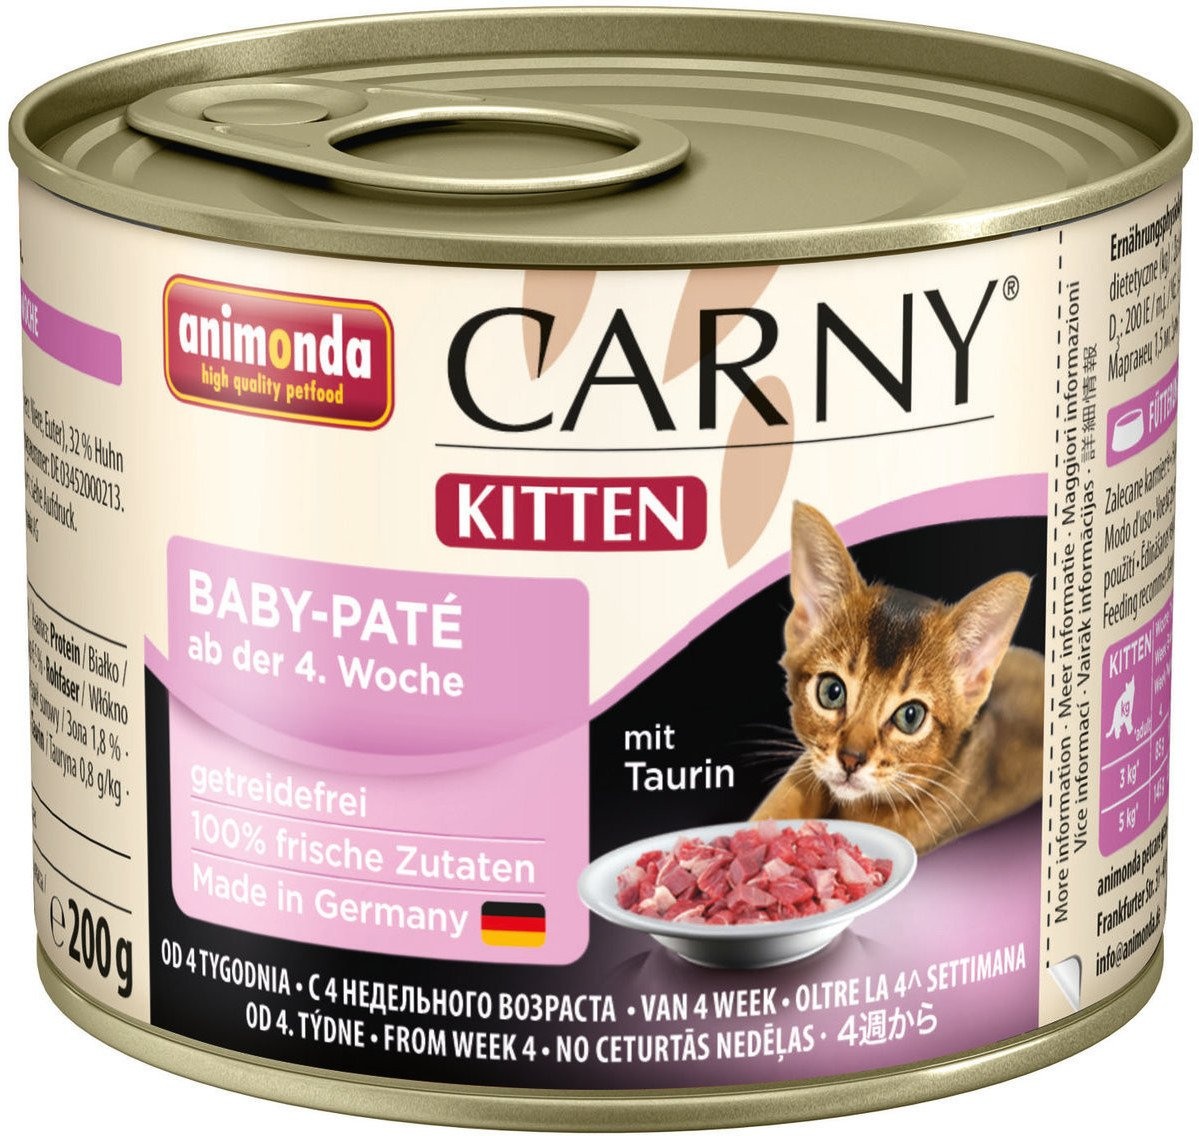 Animonda Cat Carny Kitten Baby Pate 6x200g (Rabatt für Stammkunden 3%)